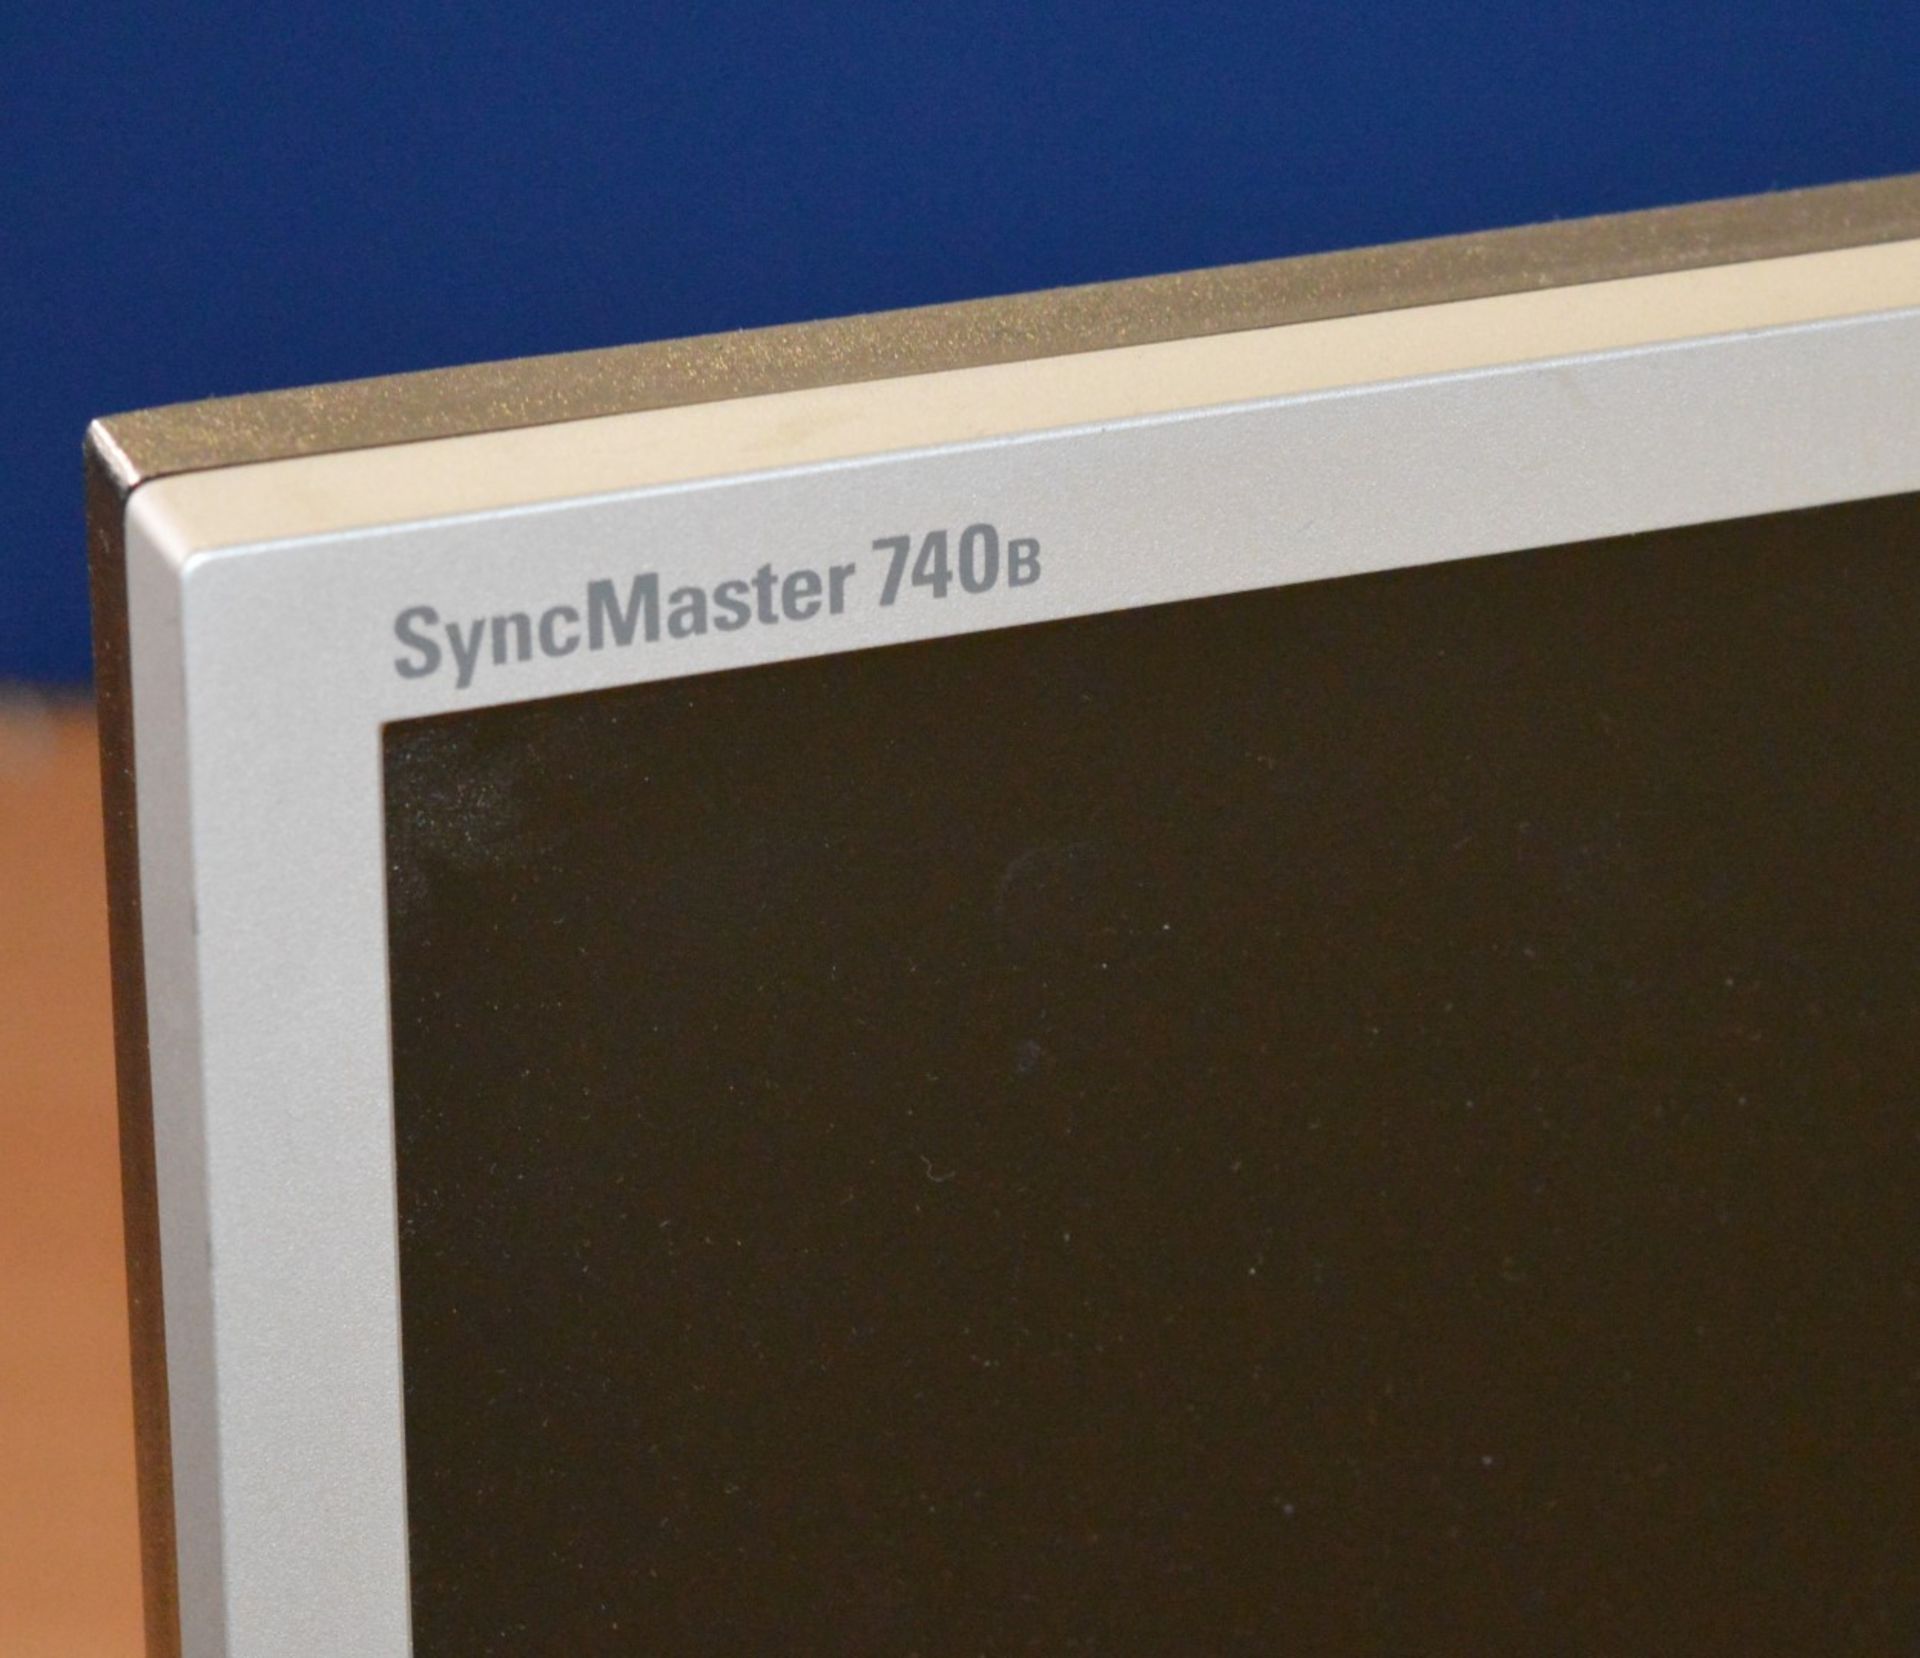 1 x Samsung Syncmaster 740B Flatscreen LCD Monitor - 17 Inch Screen Size - 1280 x 1024 Native - Image 4 of 8